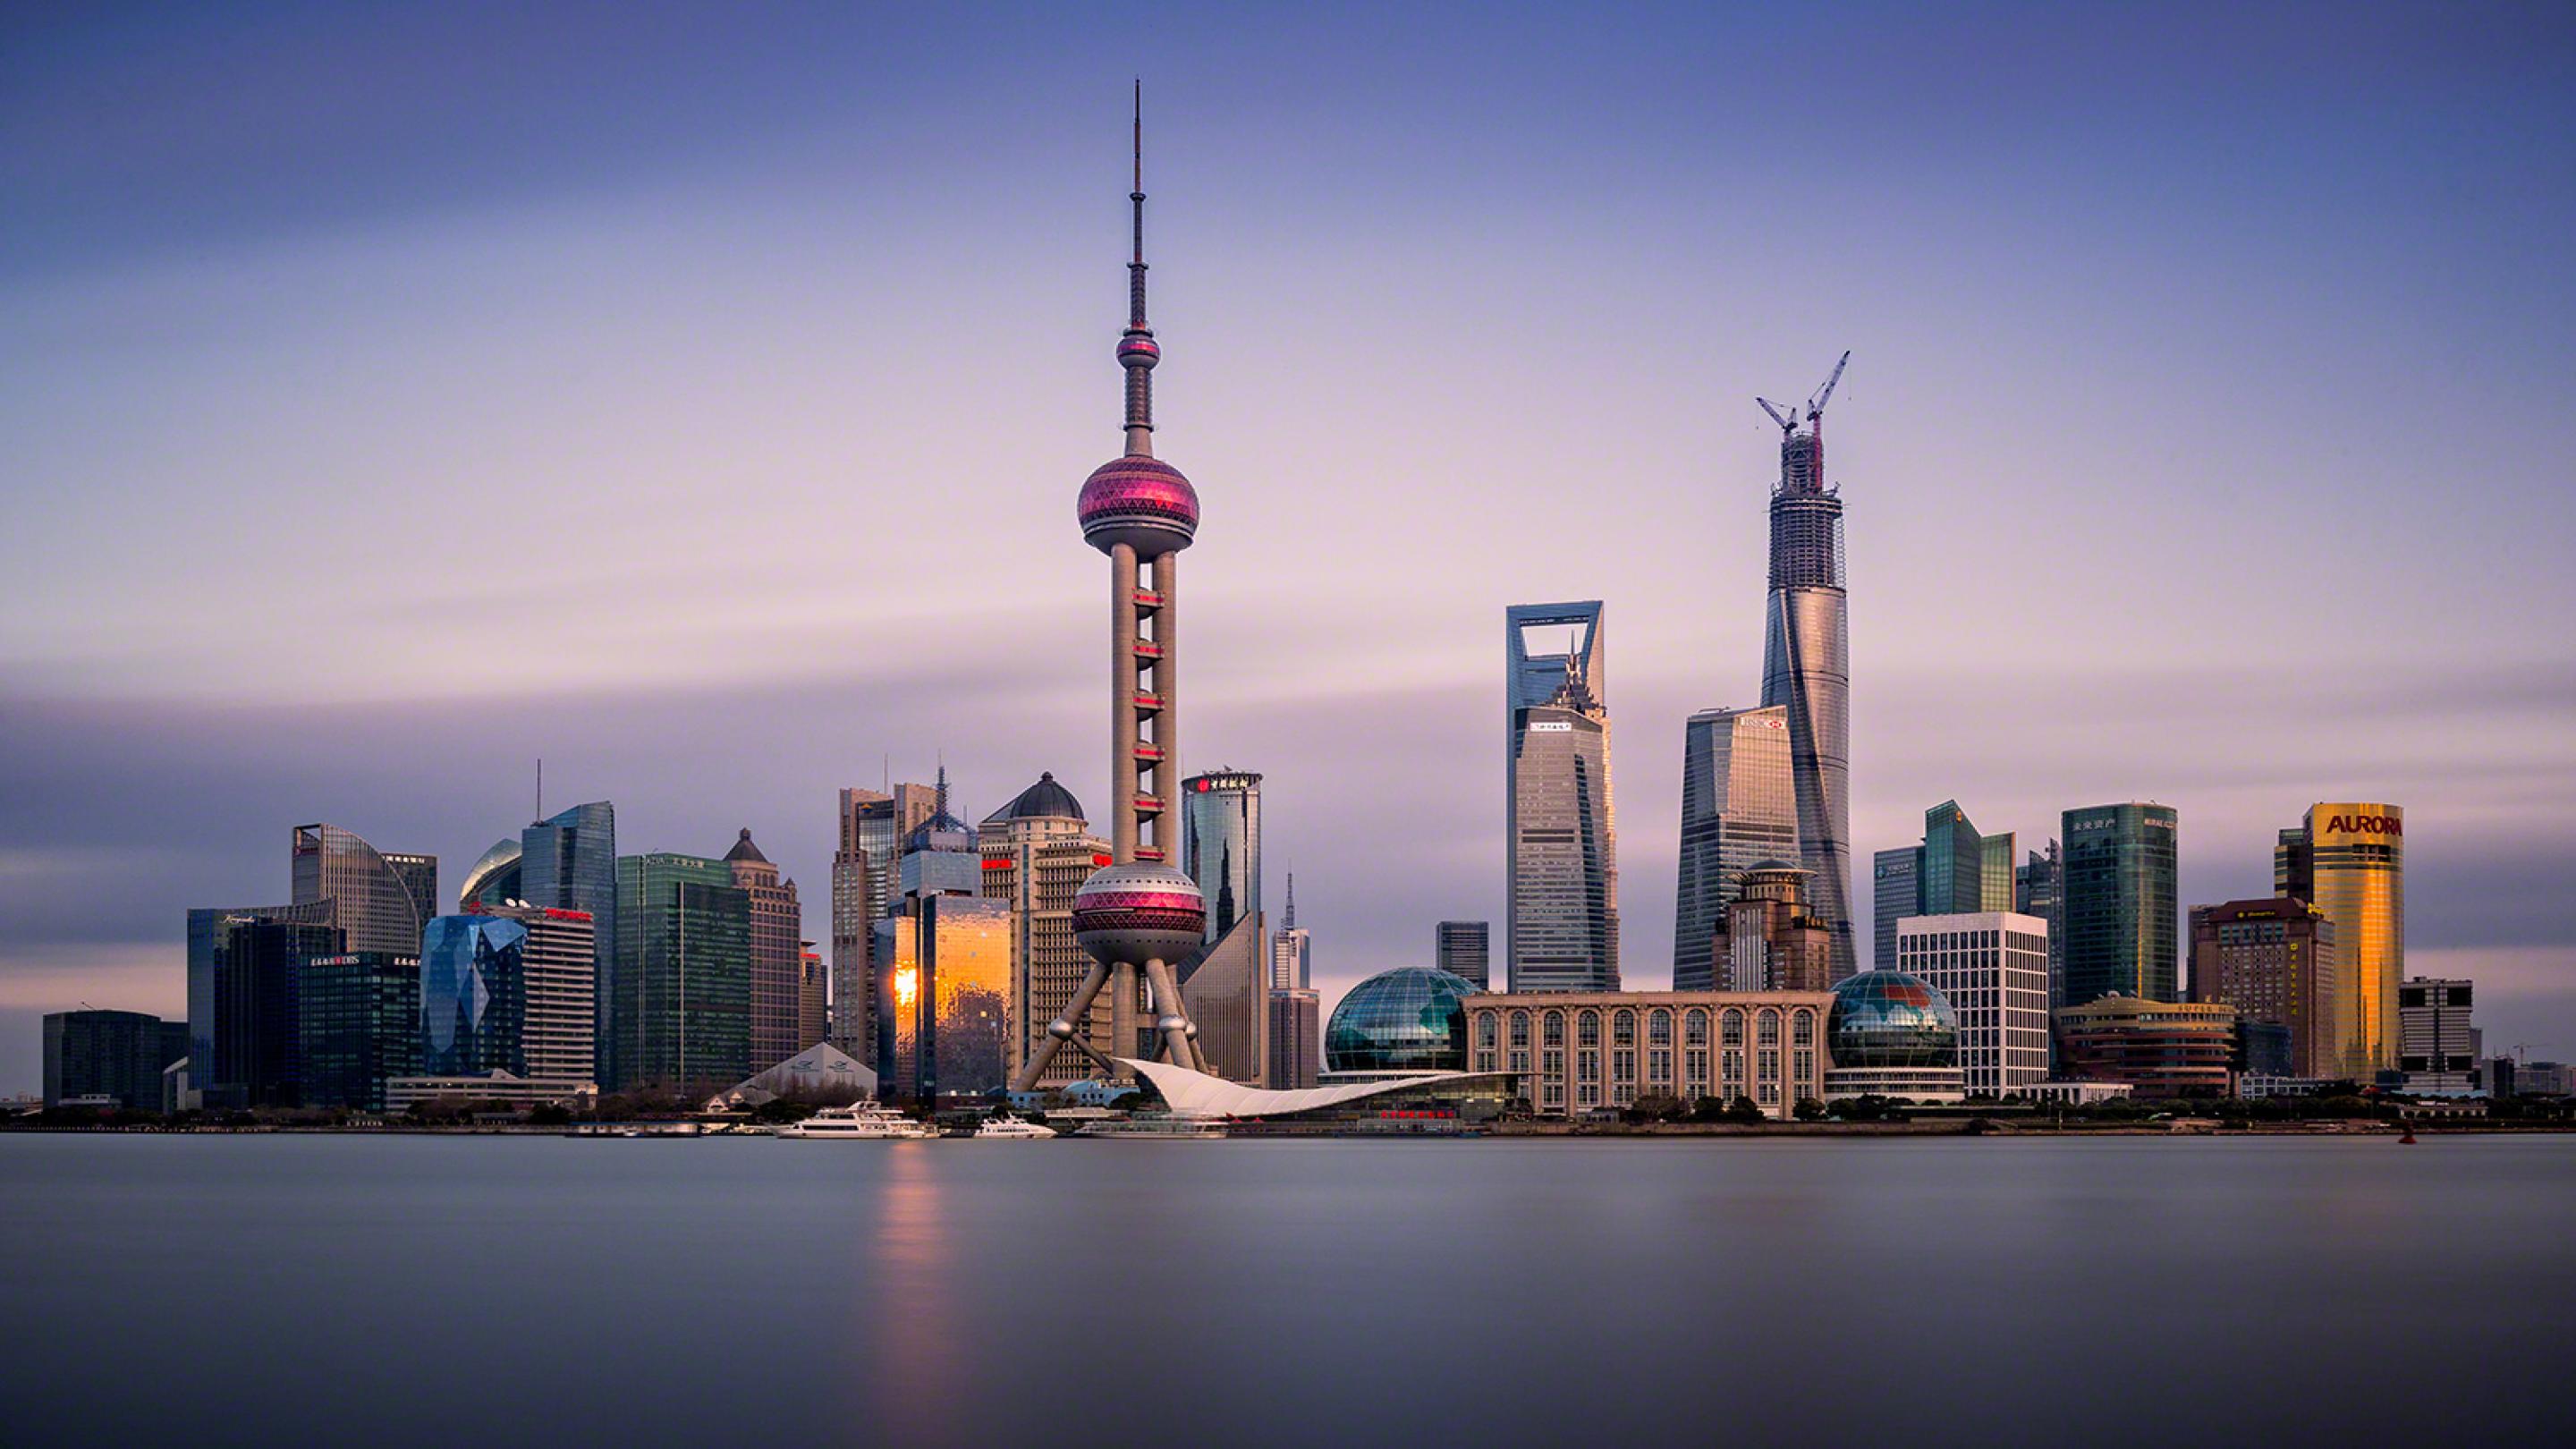 Shanghai Skyline Modern And Oriental Pearl Tv Tower Desktop Wallpaper Hd x16 Wallpapers13 Com